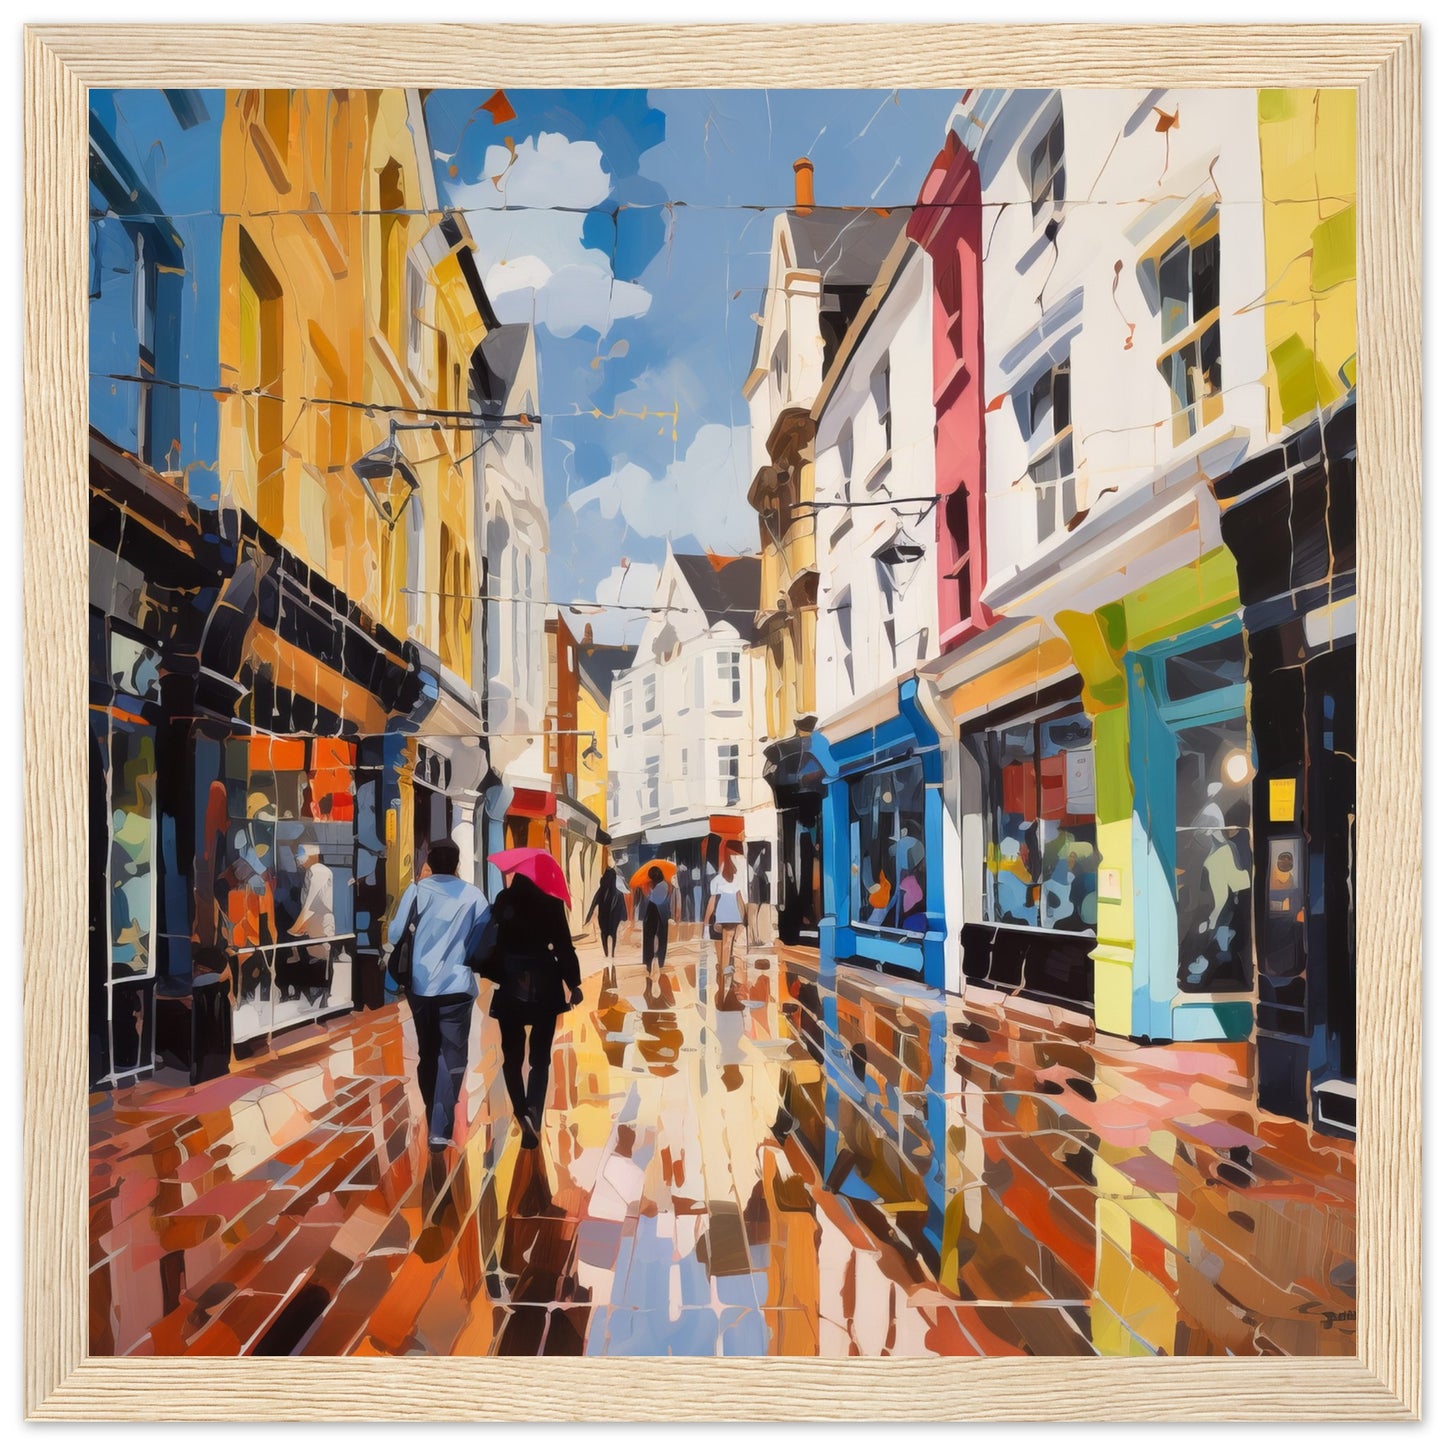 Brighton Lanes Art Prints - Print Room Ltd Wood frame 50x50 cm / 20x20"